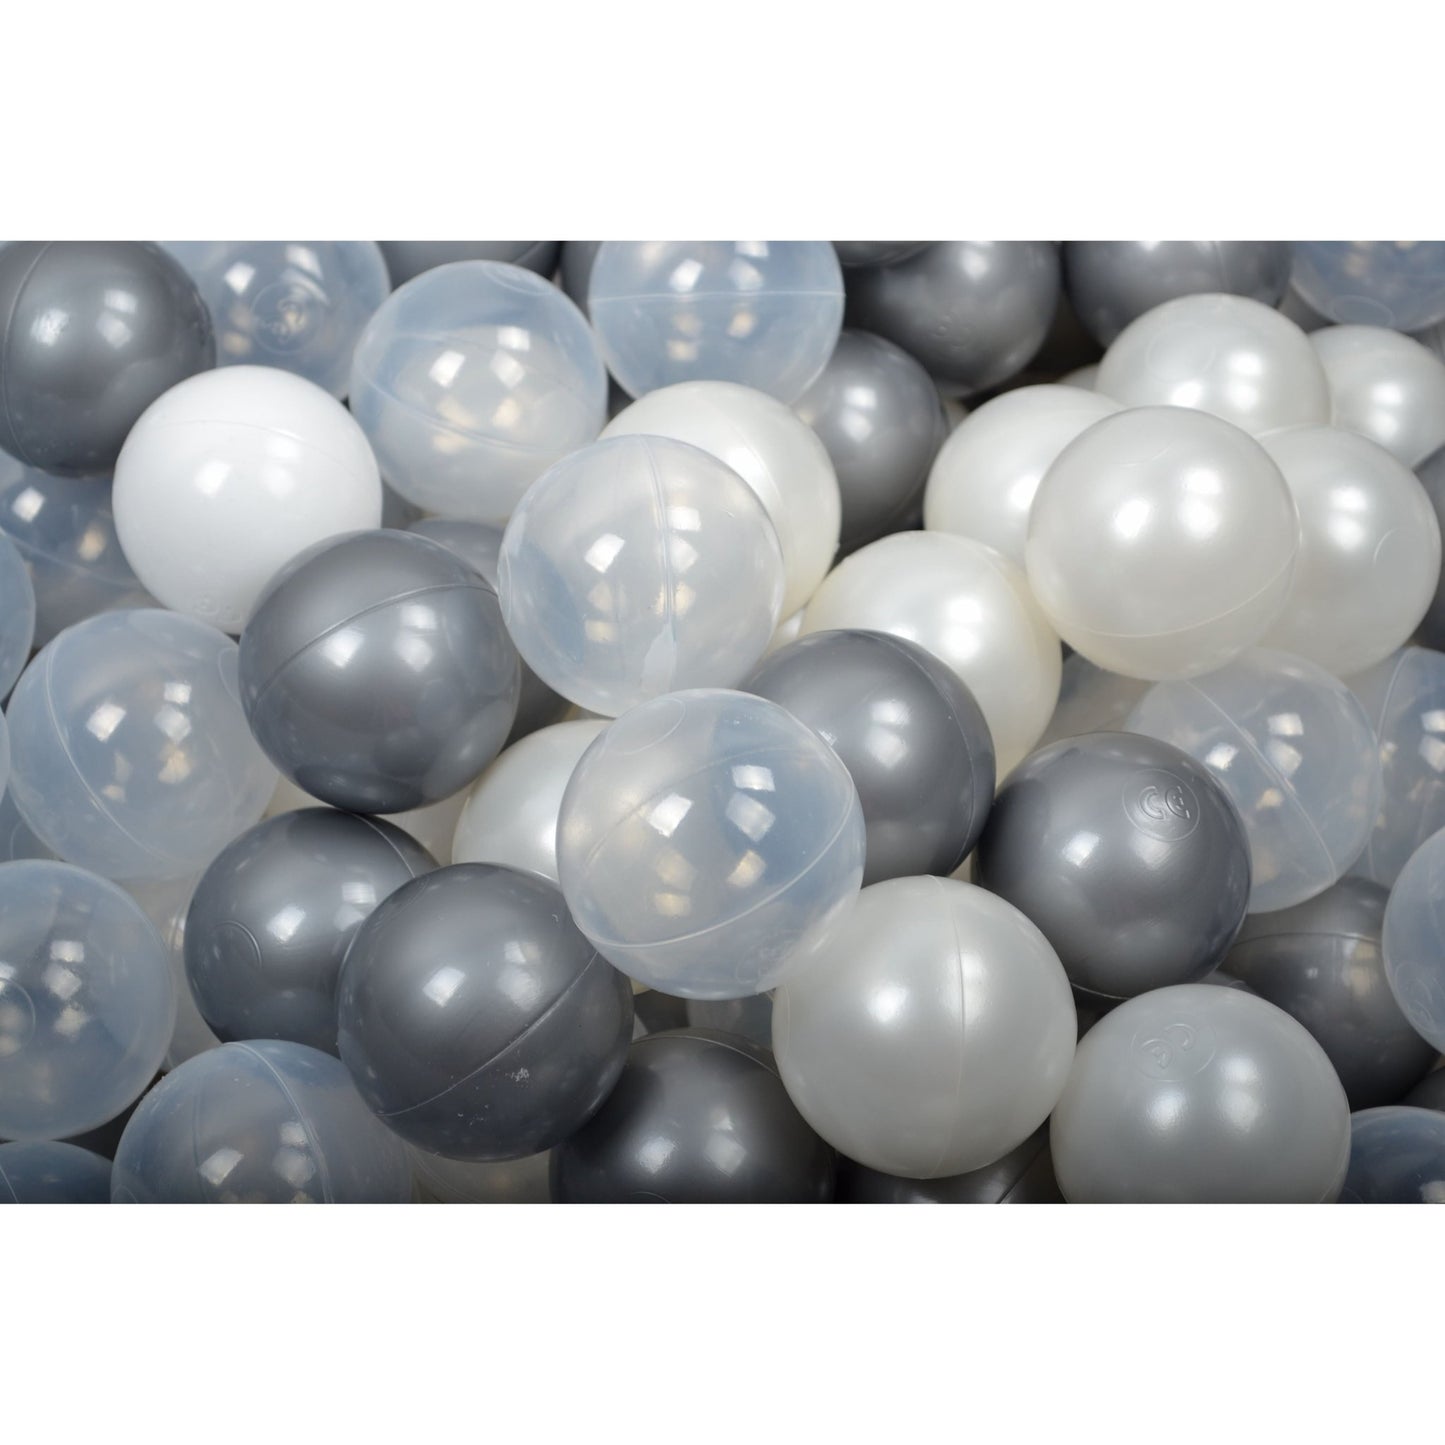 Green Velvet Round Foam Ball Pit - Select Your Own Balls